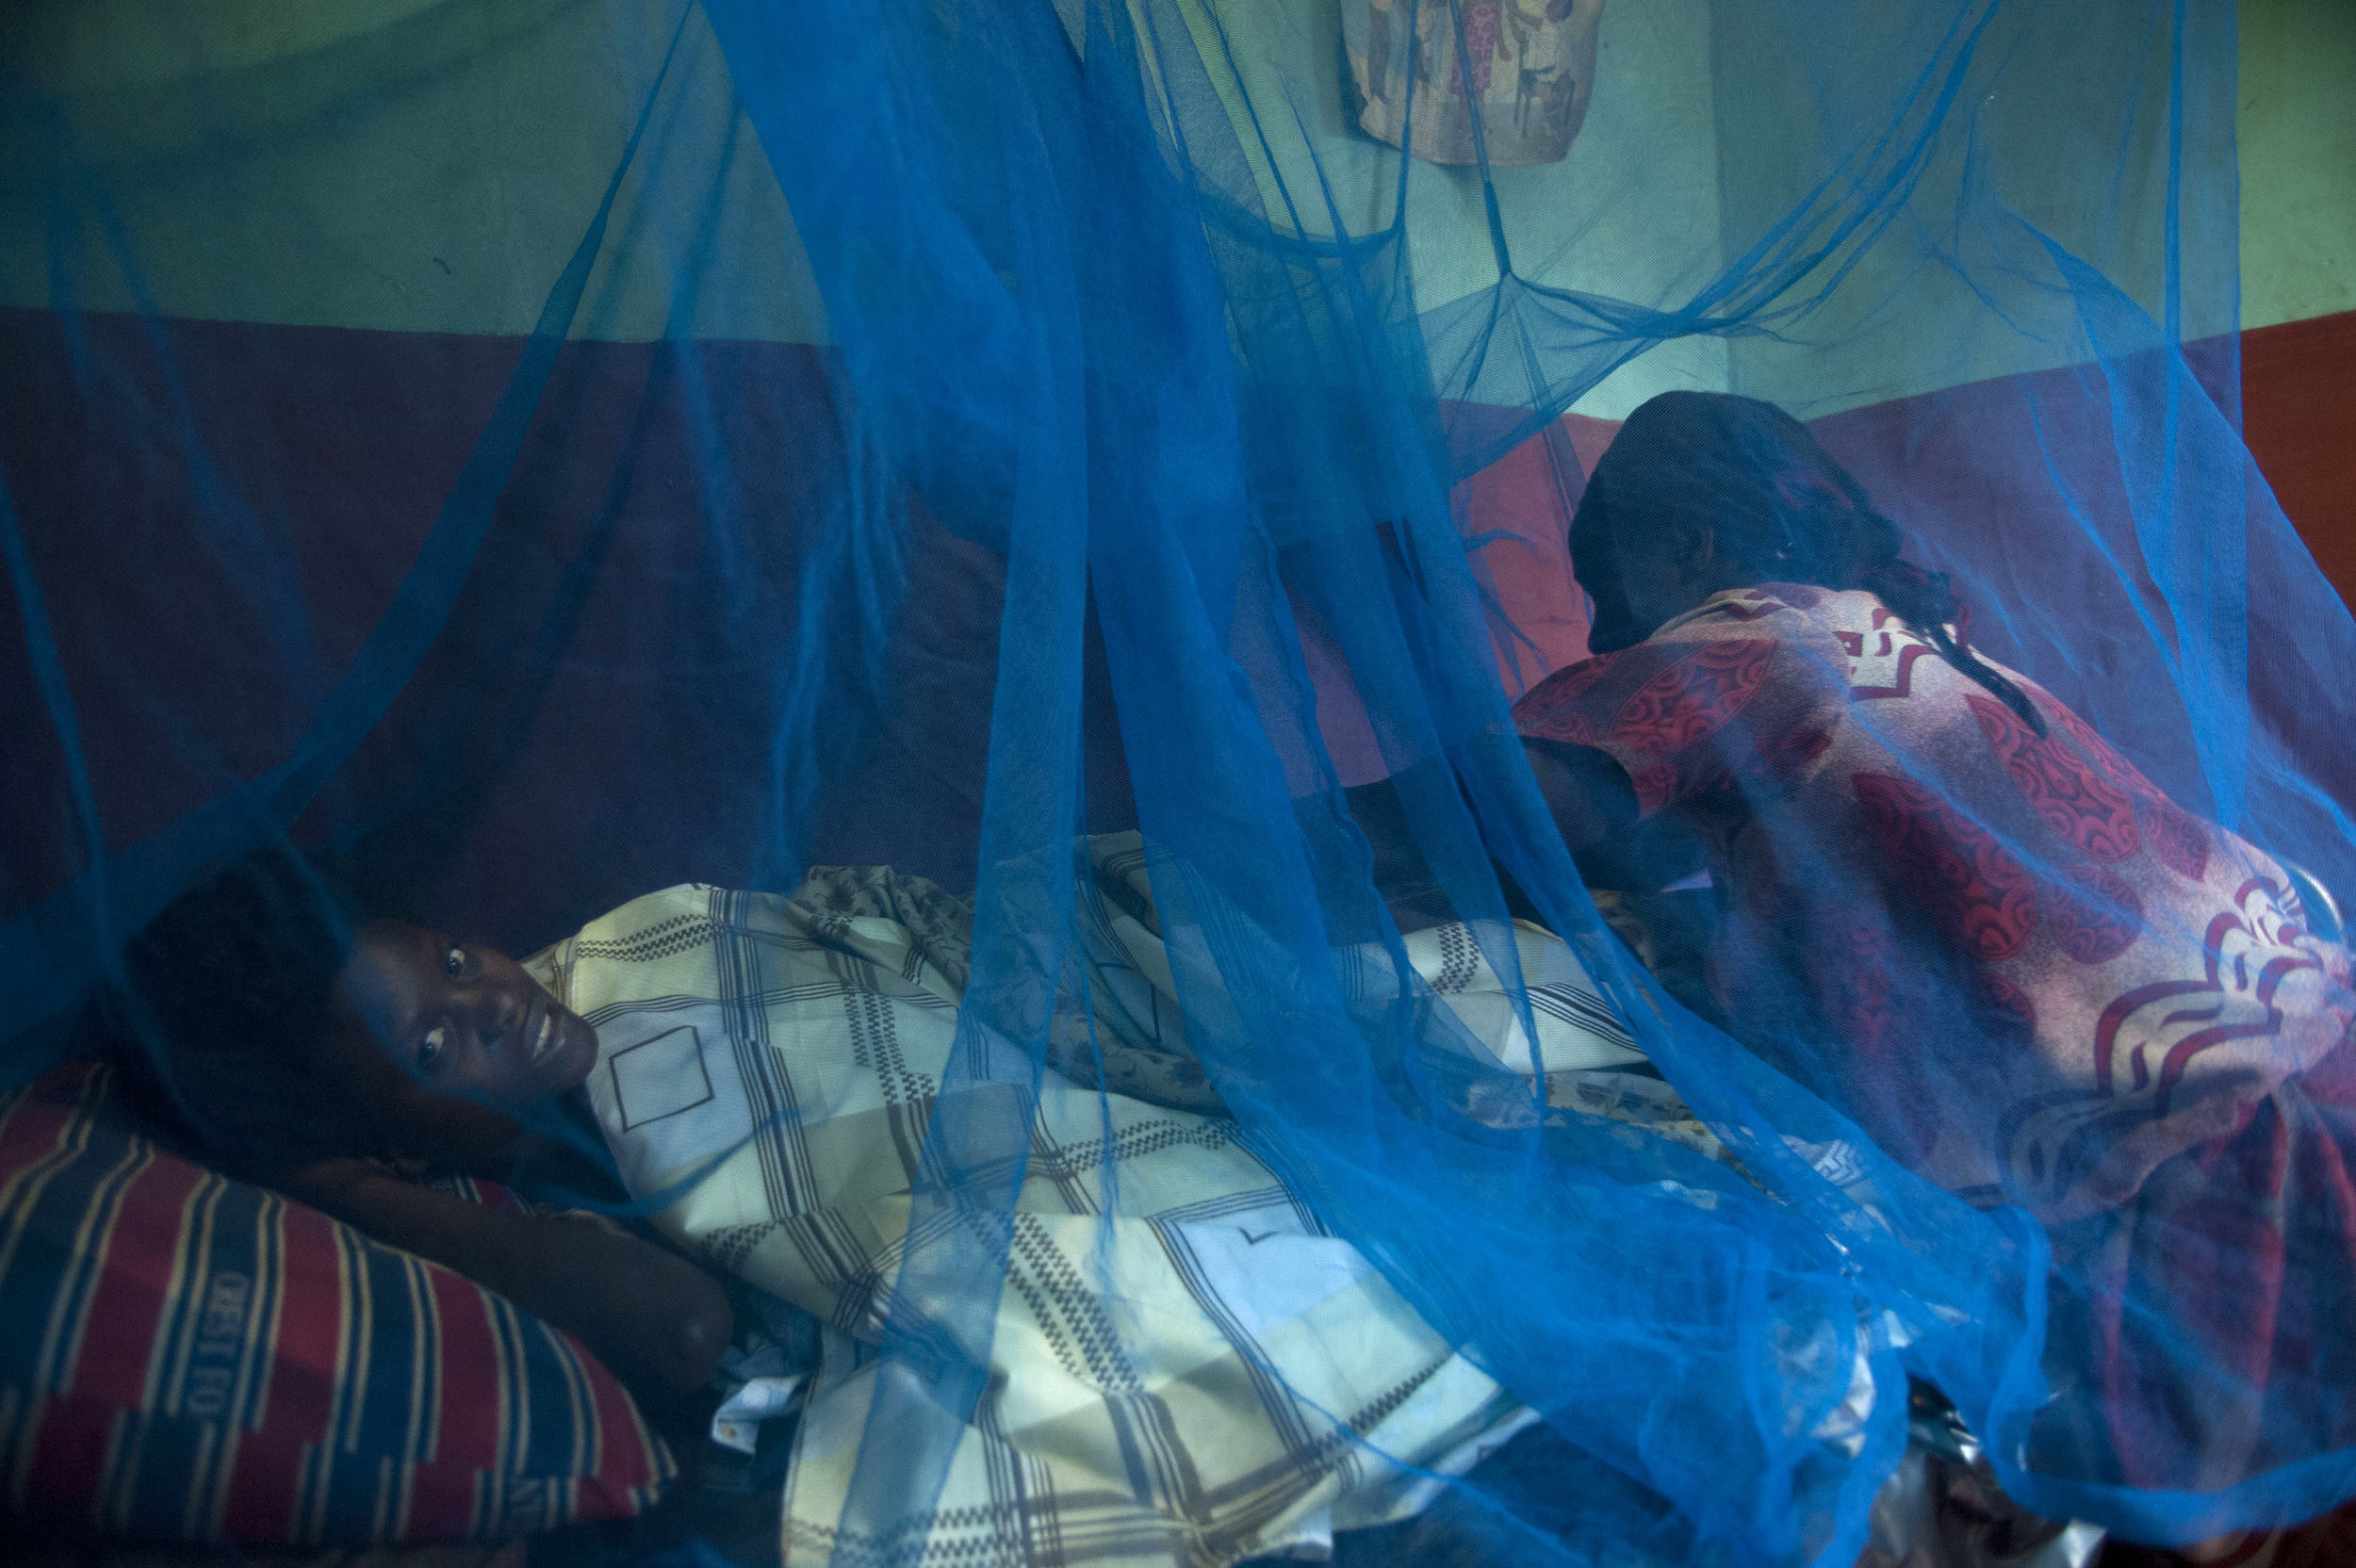  A nurse tends to a women who has just given birth, Bujagali , Uganda.  